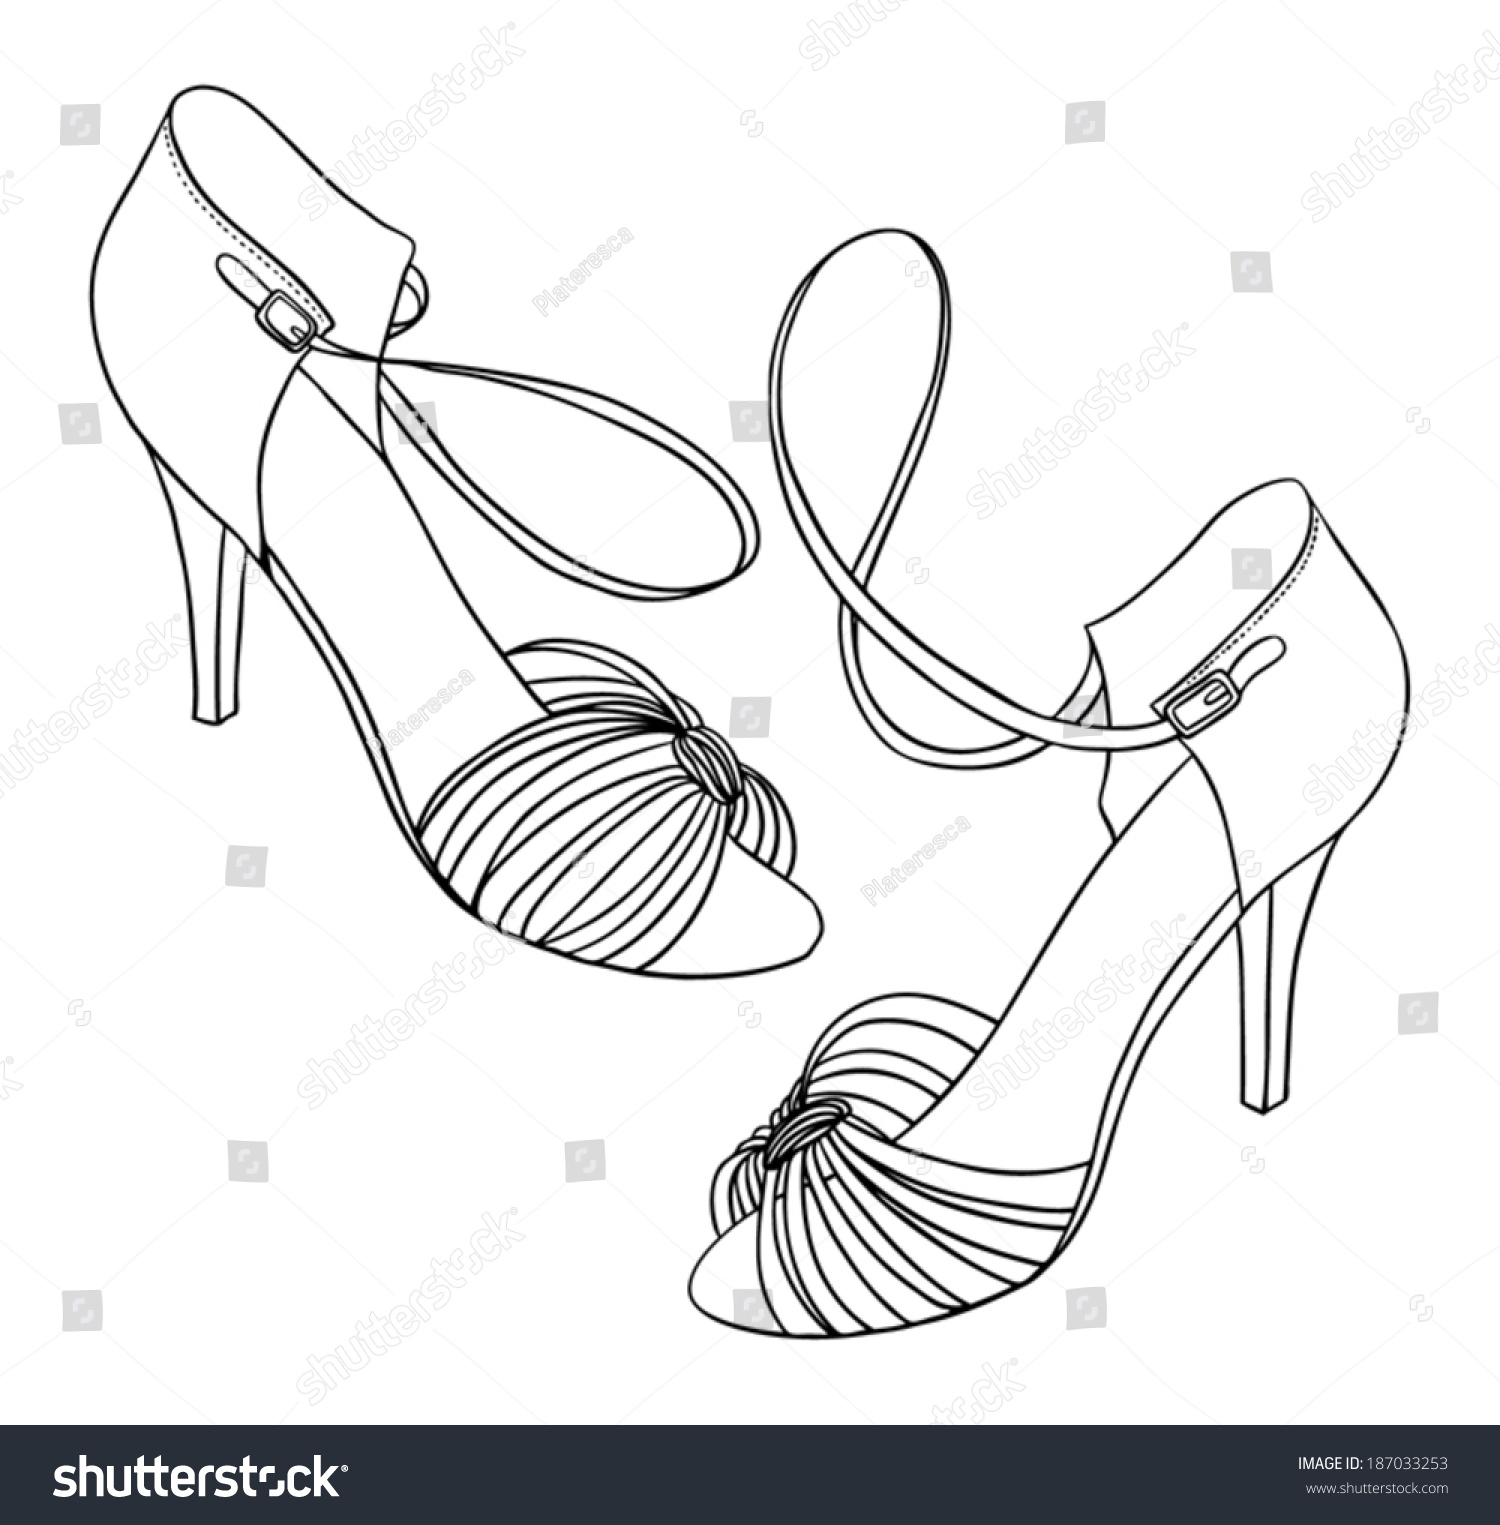 Vector Drawing Of Salsa Dancing Shoes - 187033253 : Shutterstock